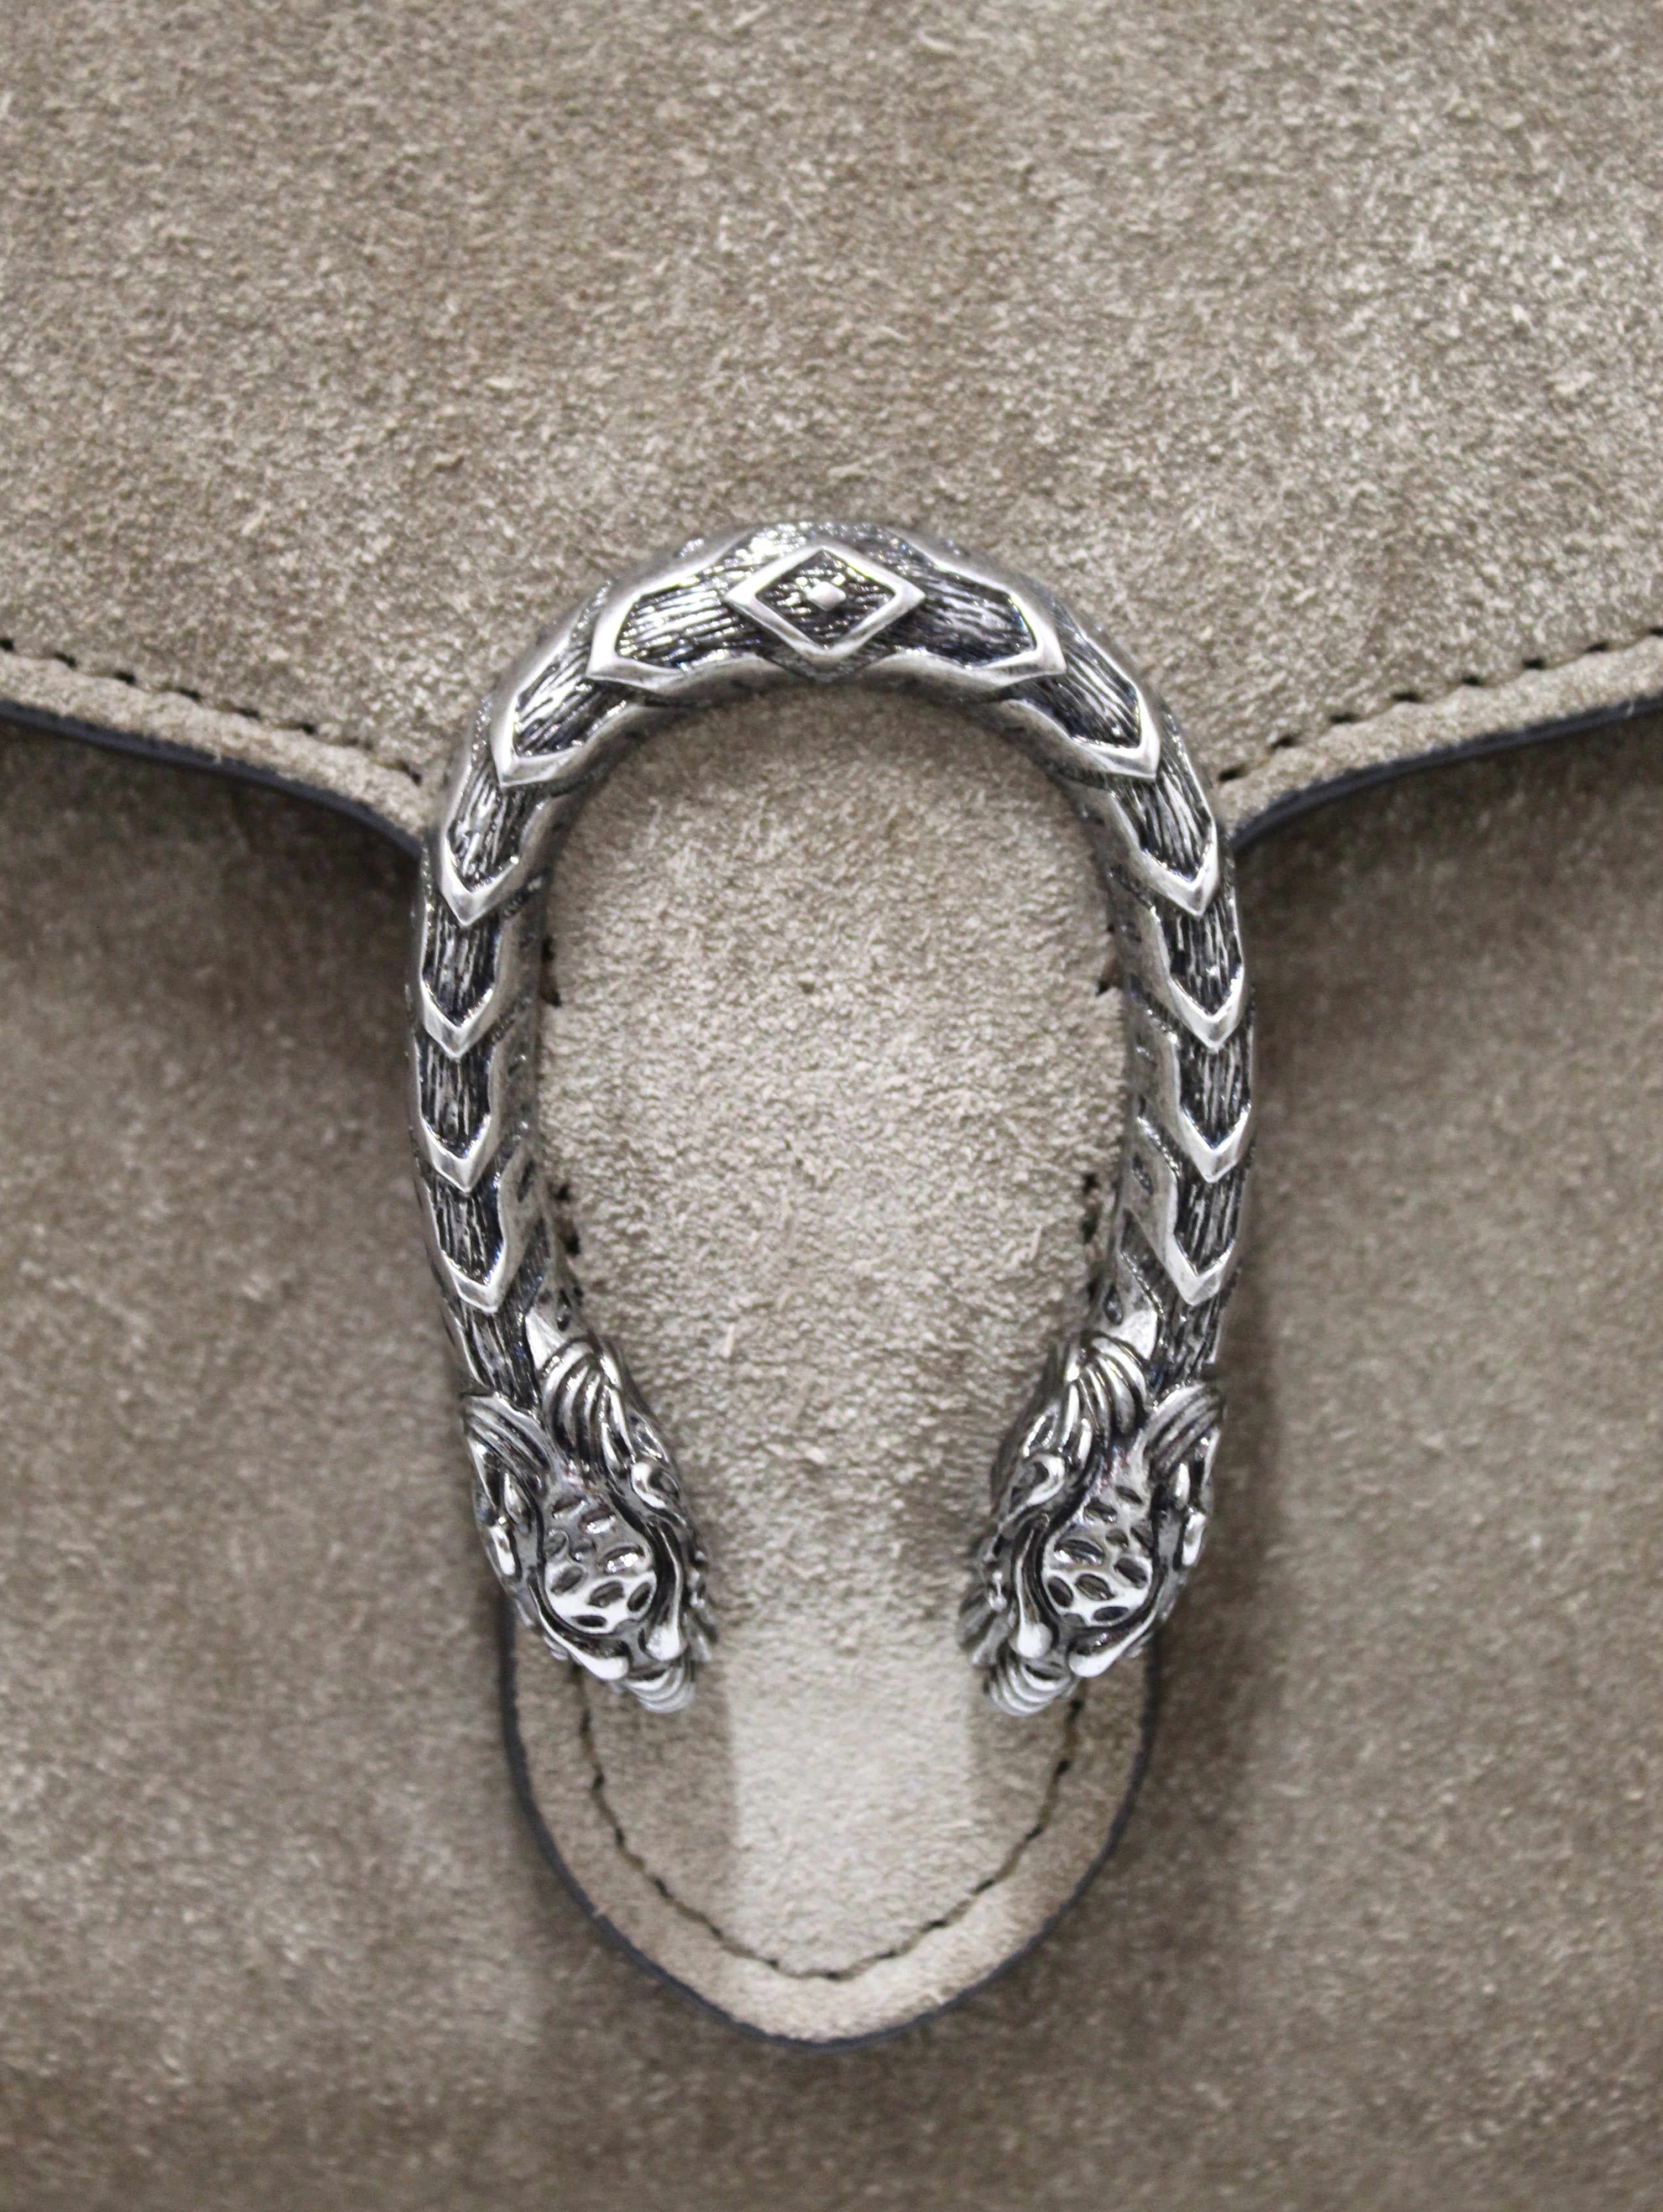 Authentic Gucci Dionysus Suede Mini Chain Crossbody Bag